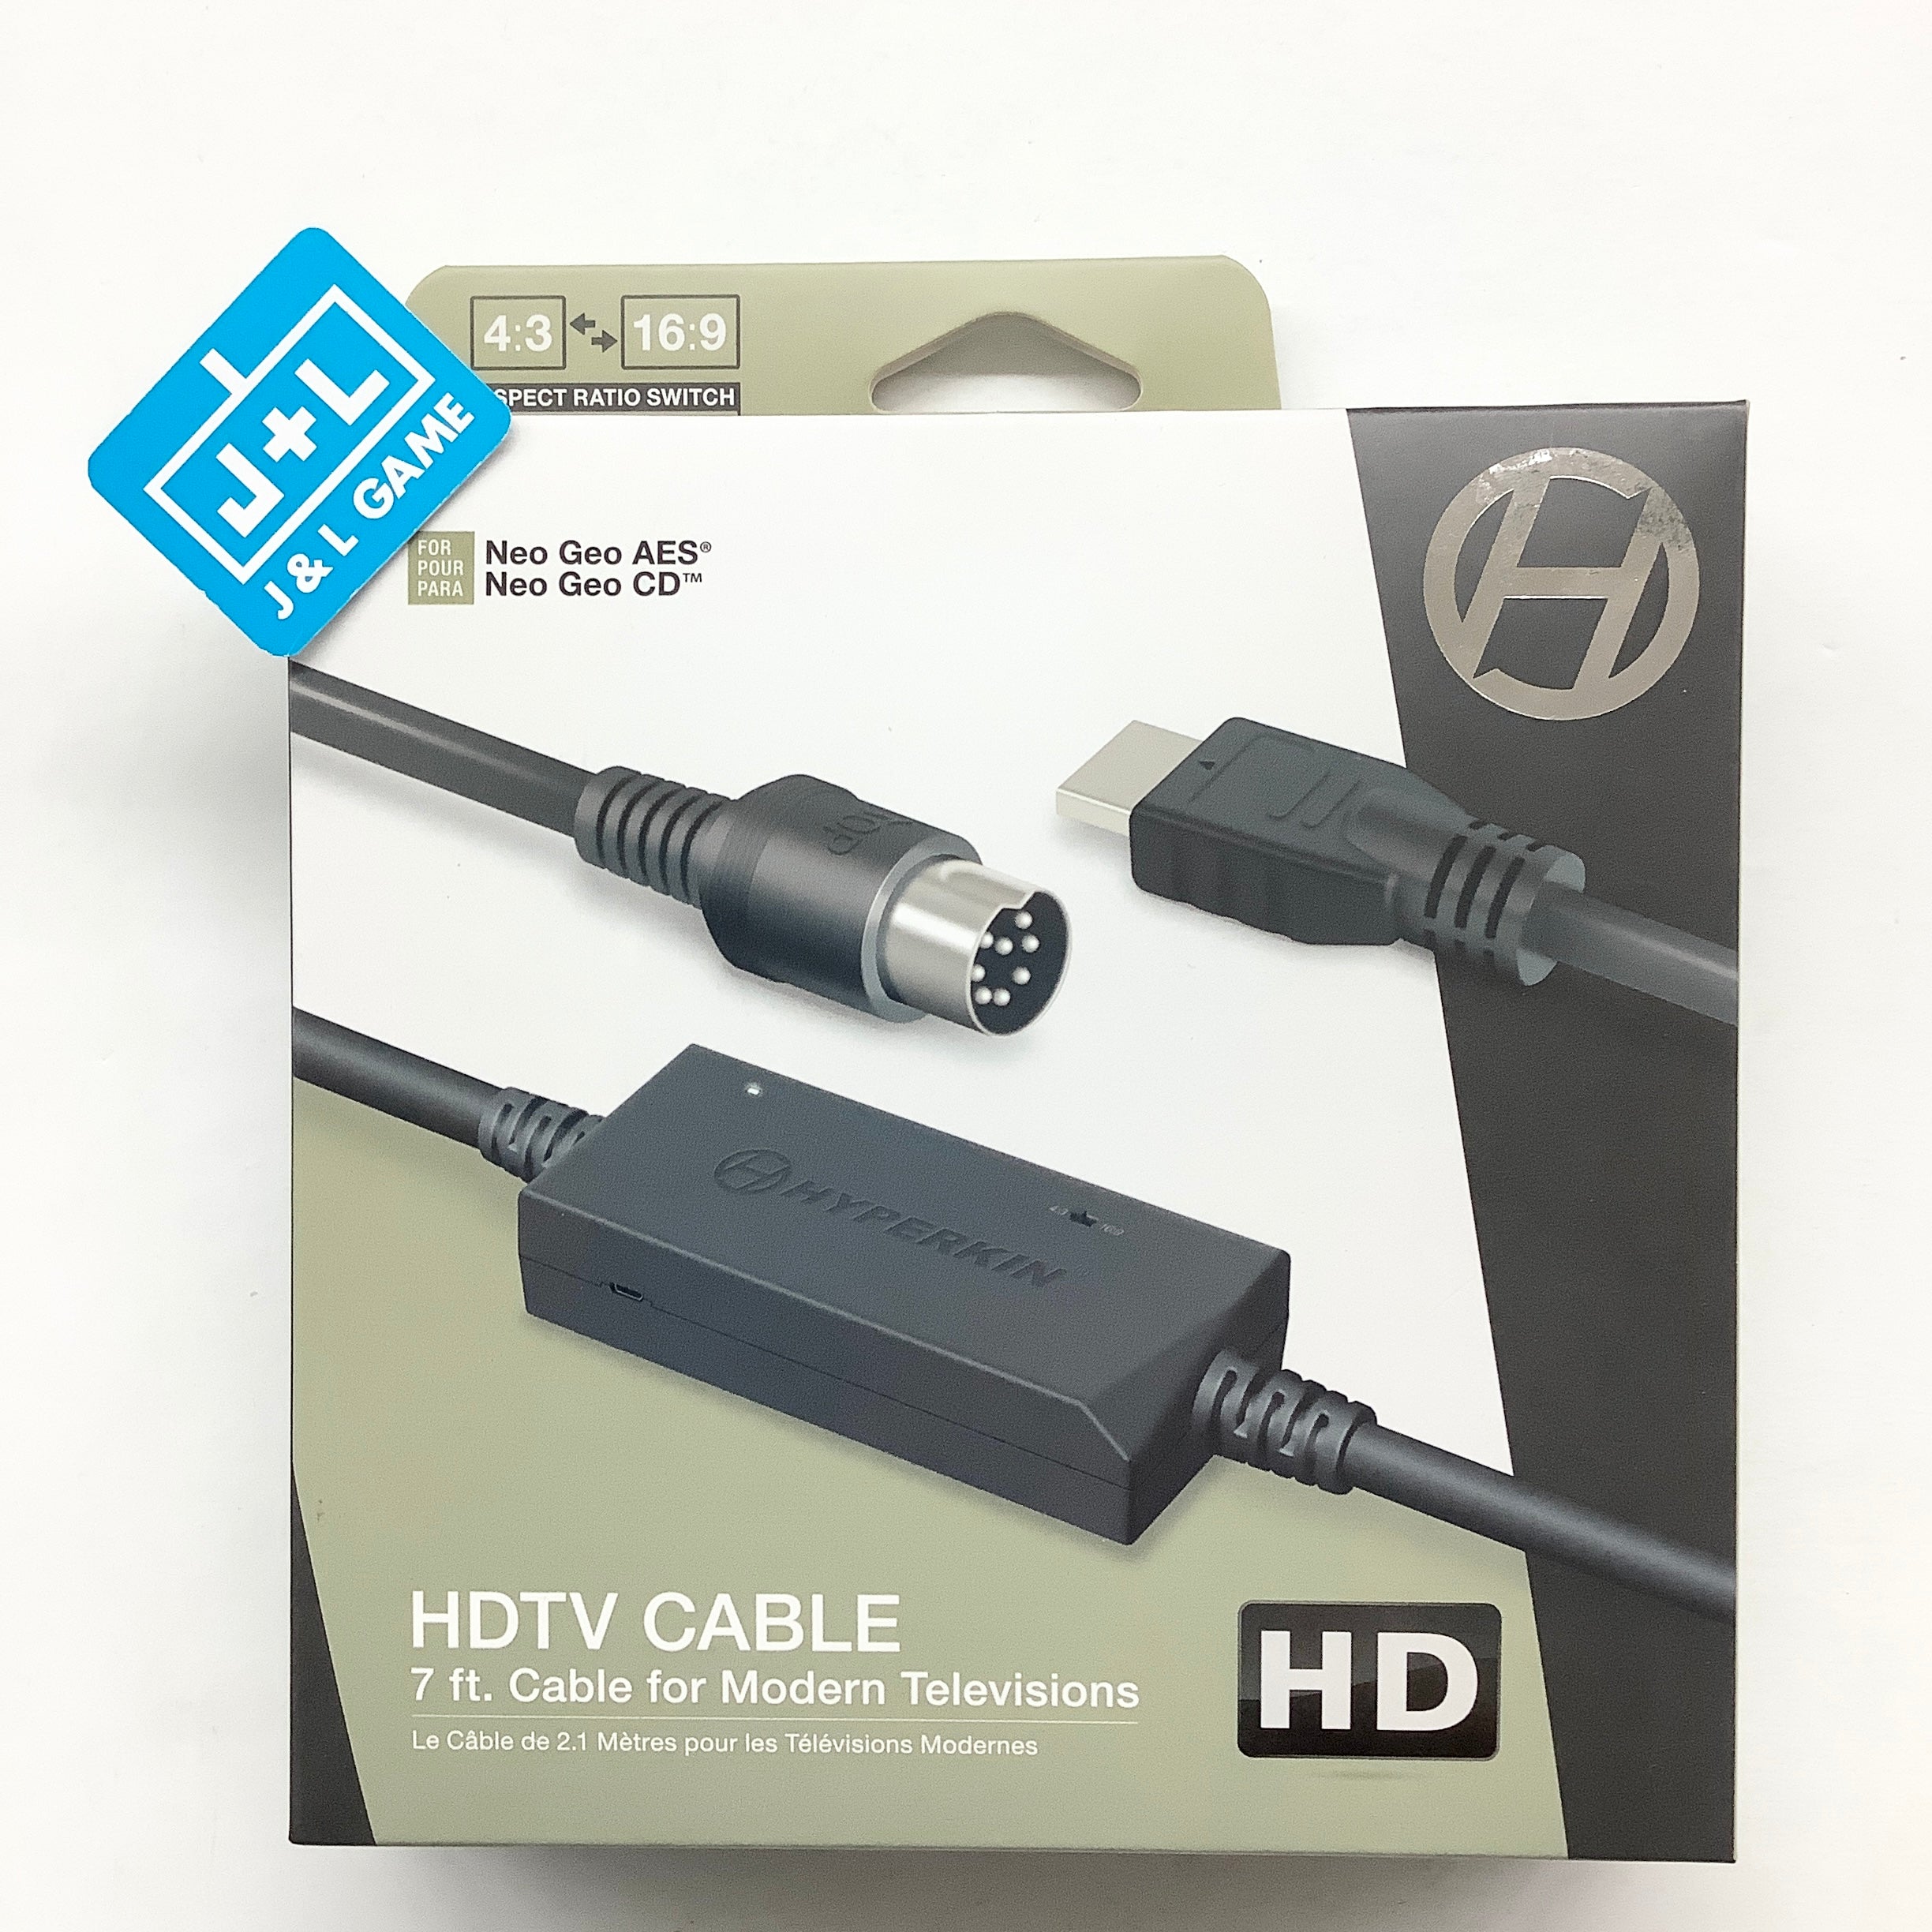 Hyperkin Hdtv Cable for Neo Geo Aes/ Neo Geo CD/Neo Geo CDZ - SNK NeoGeo Accessories Hyperkin   